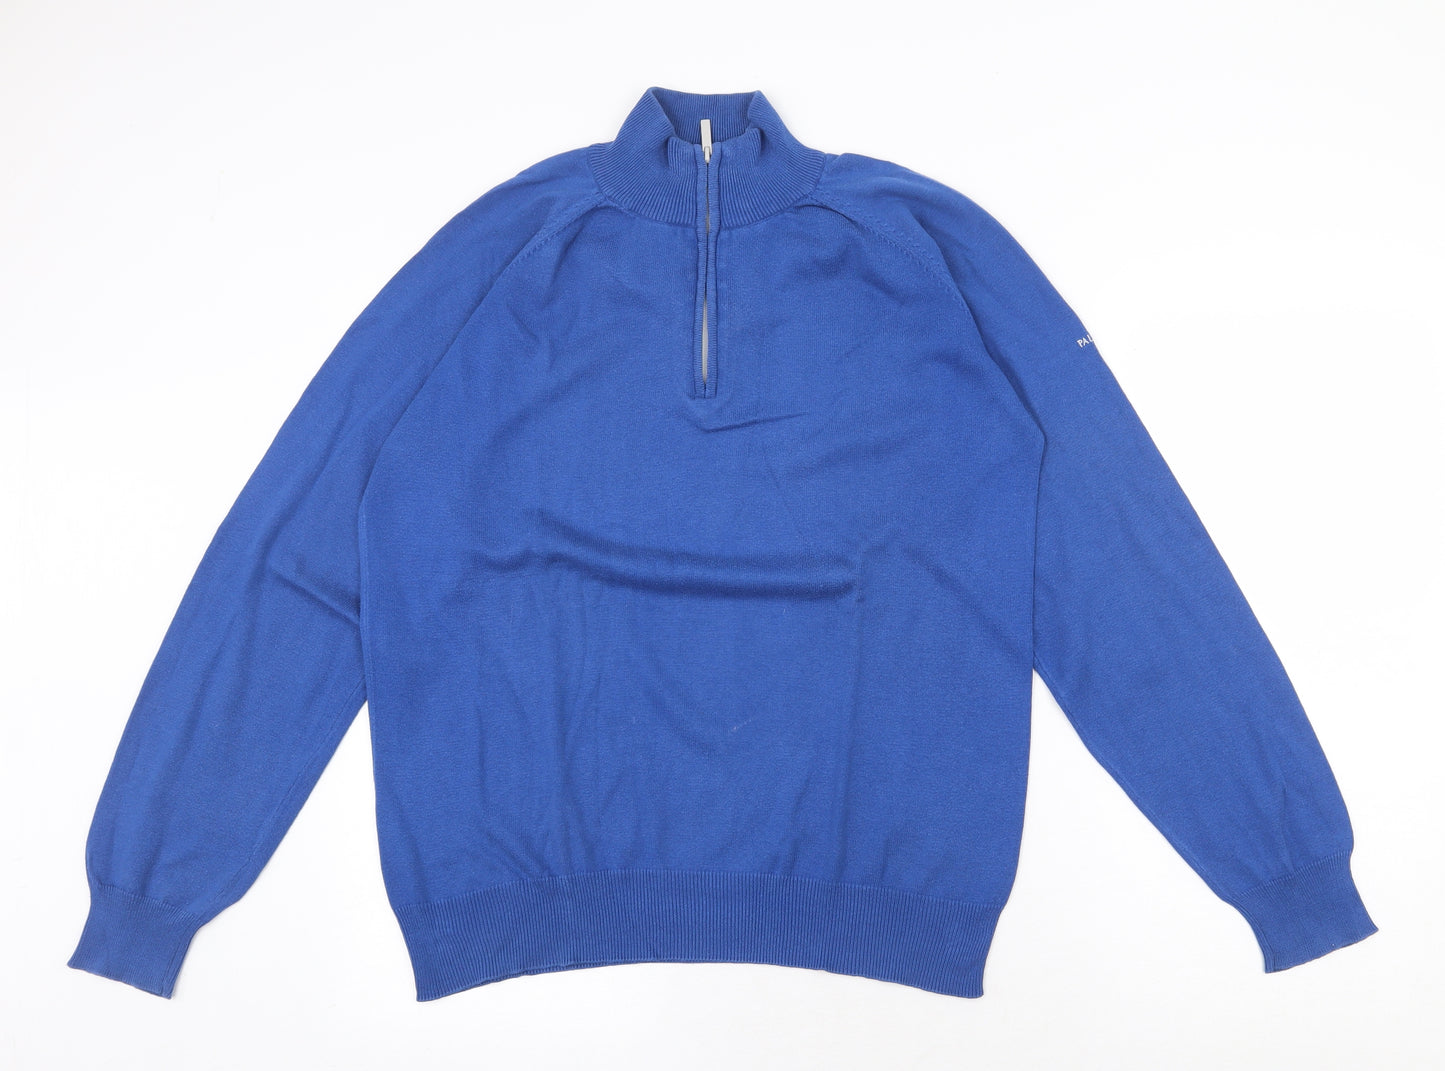 Palm Grove Mens Blue Cotton Pullover Sweatshirt Size M